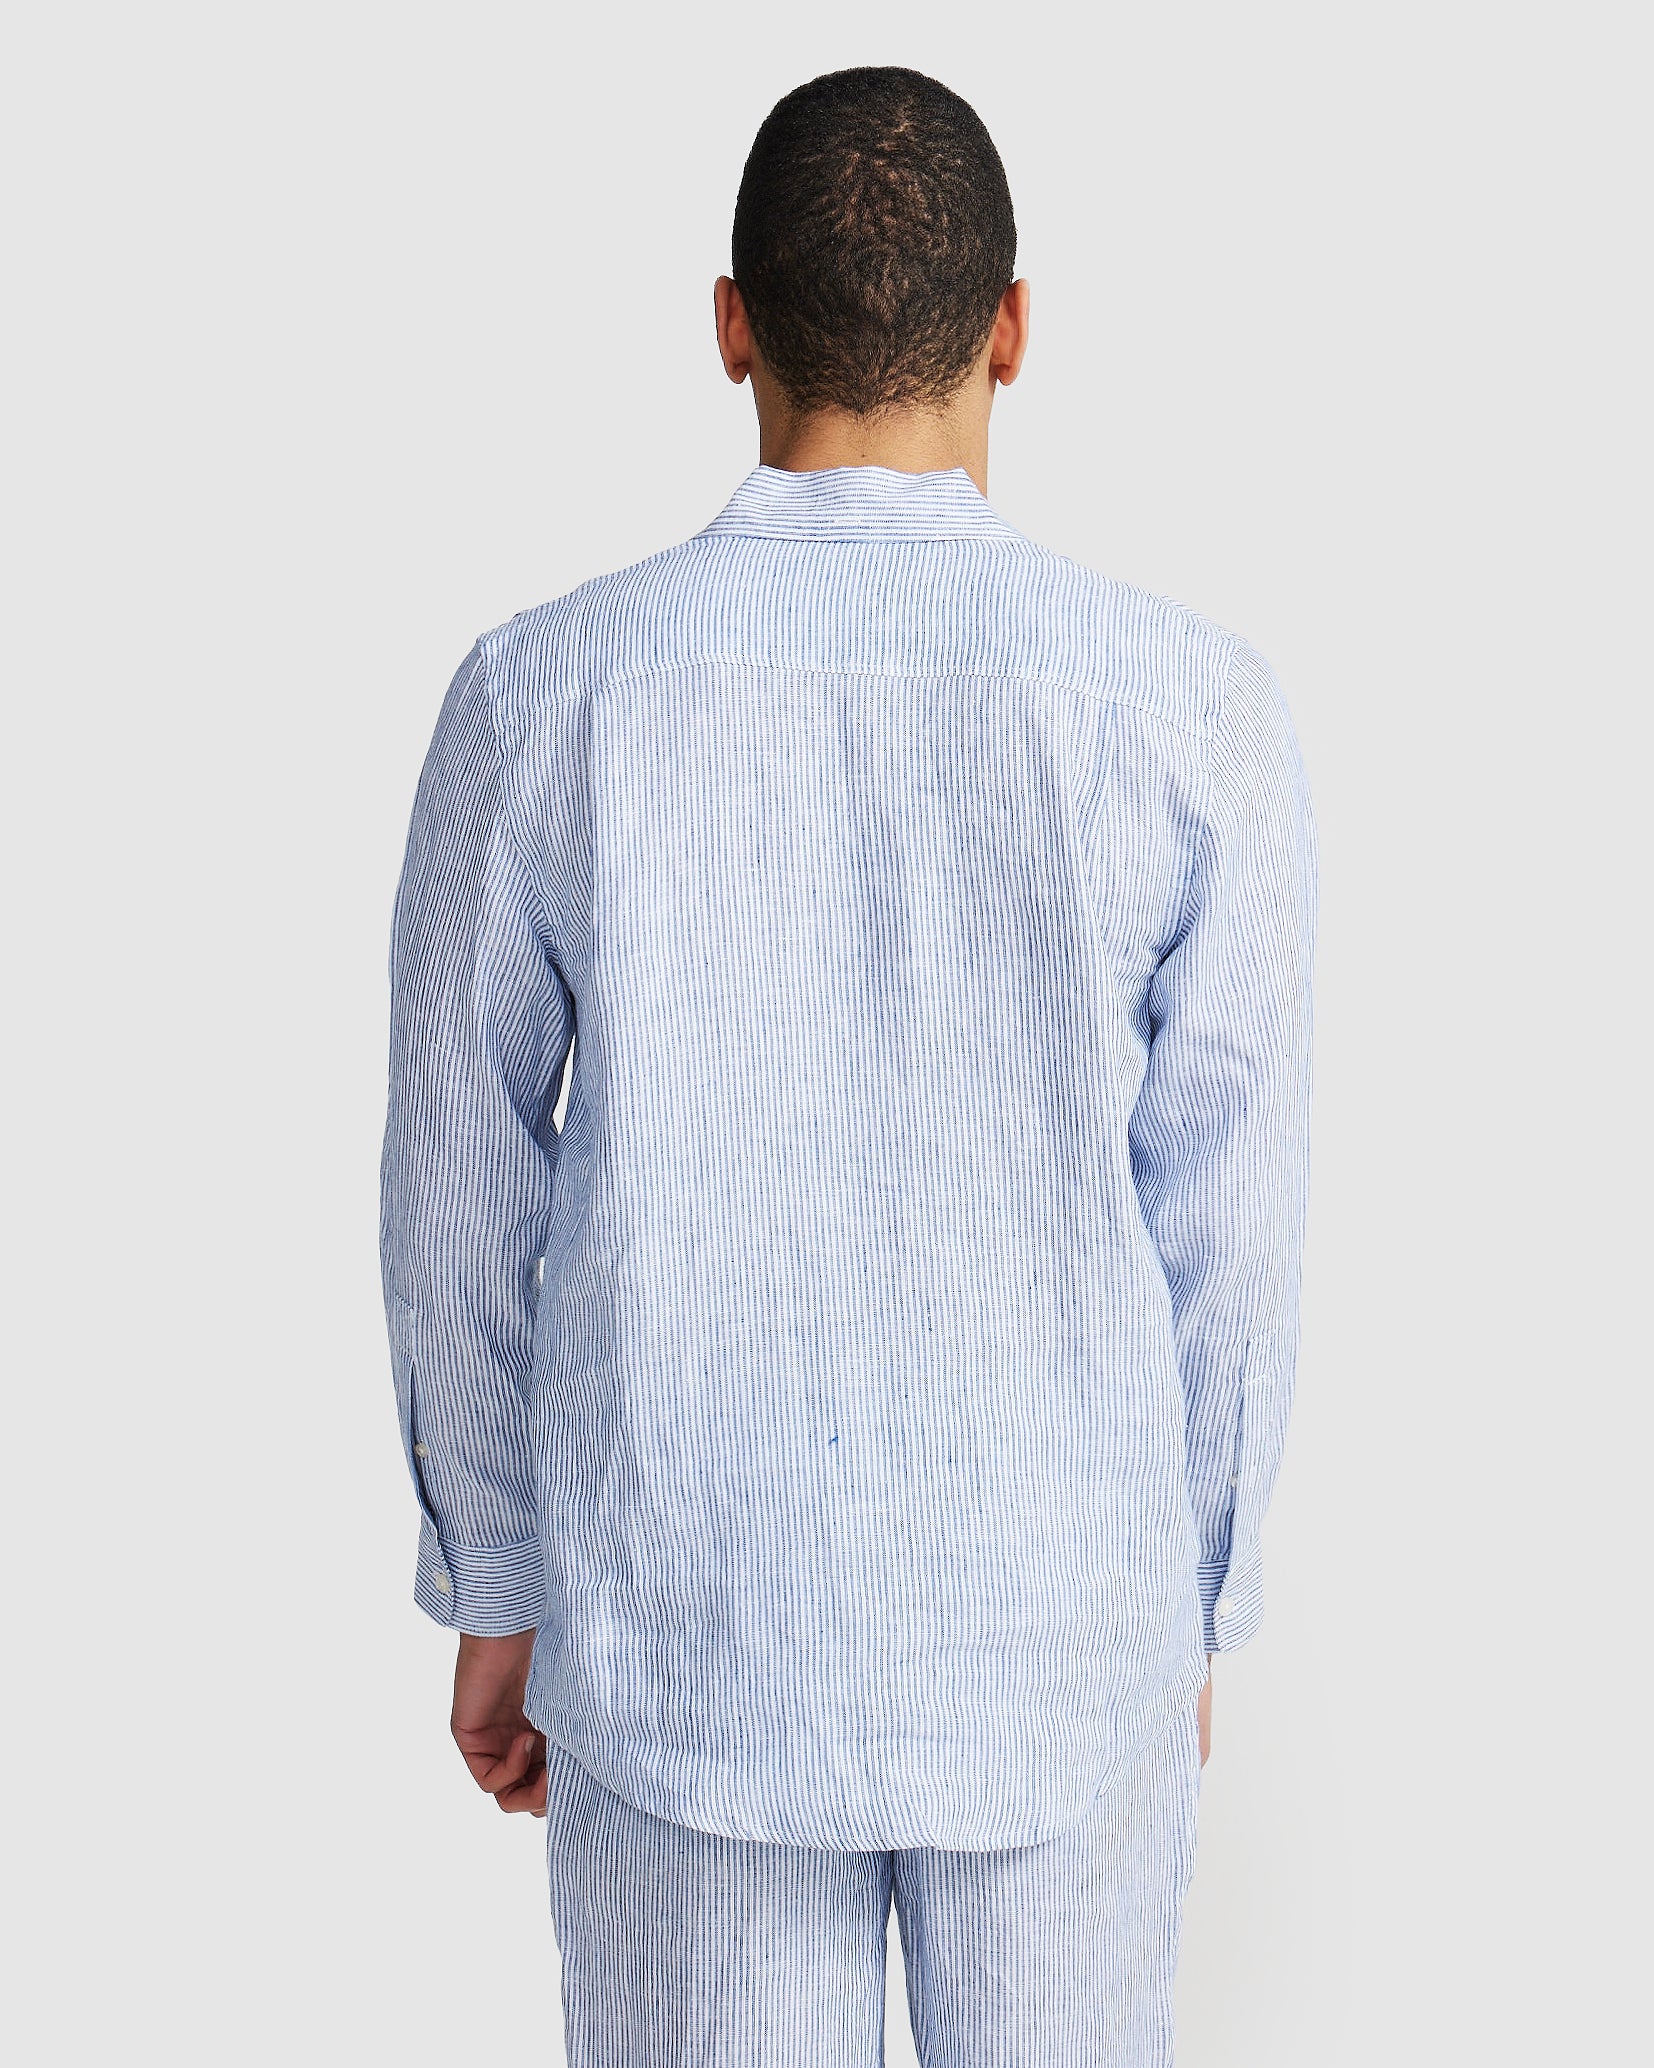 ortc - Linen Shirt